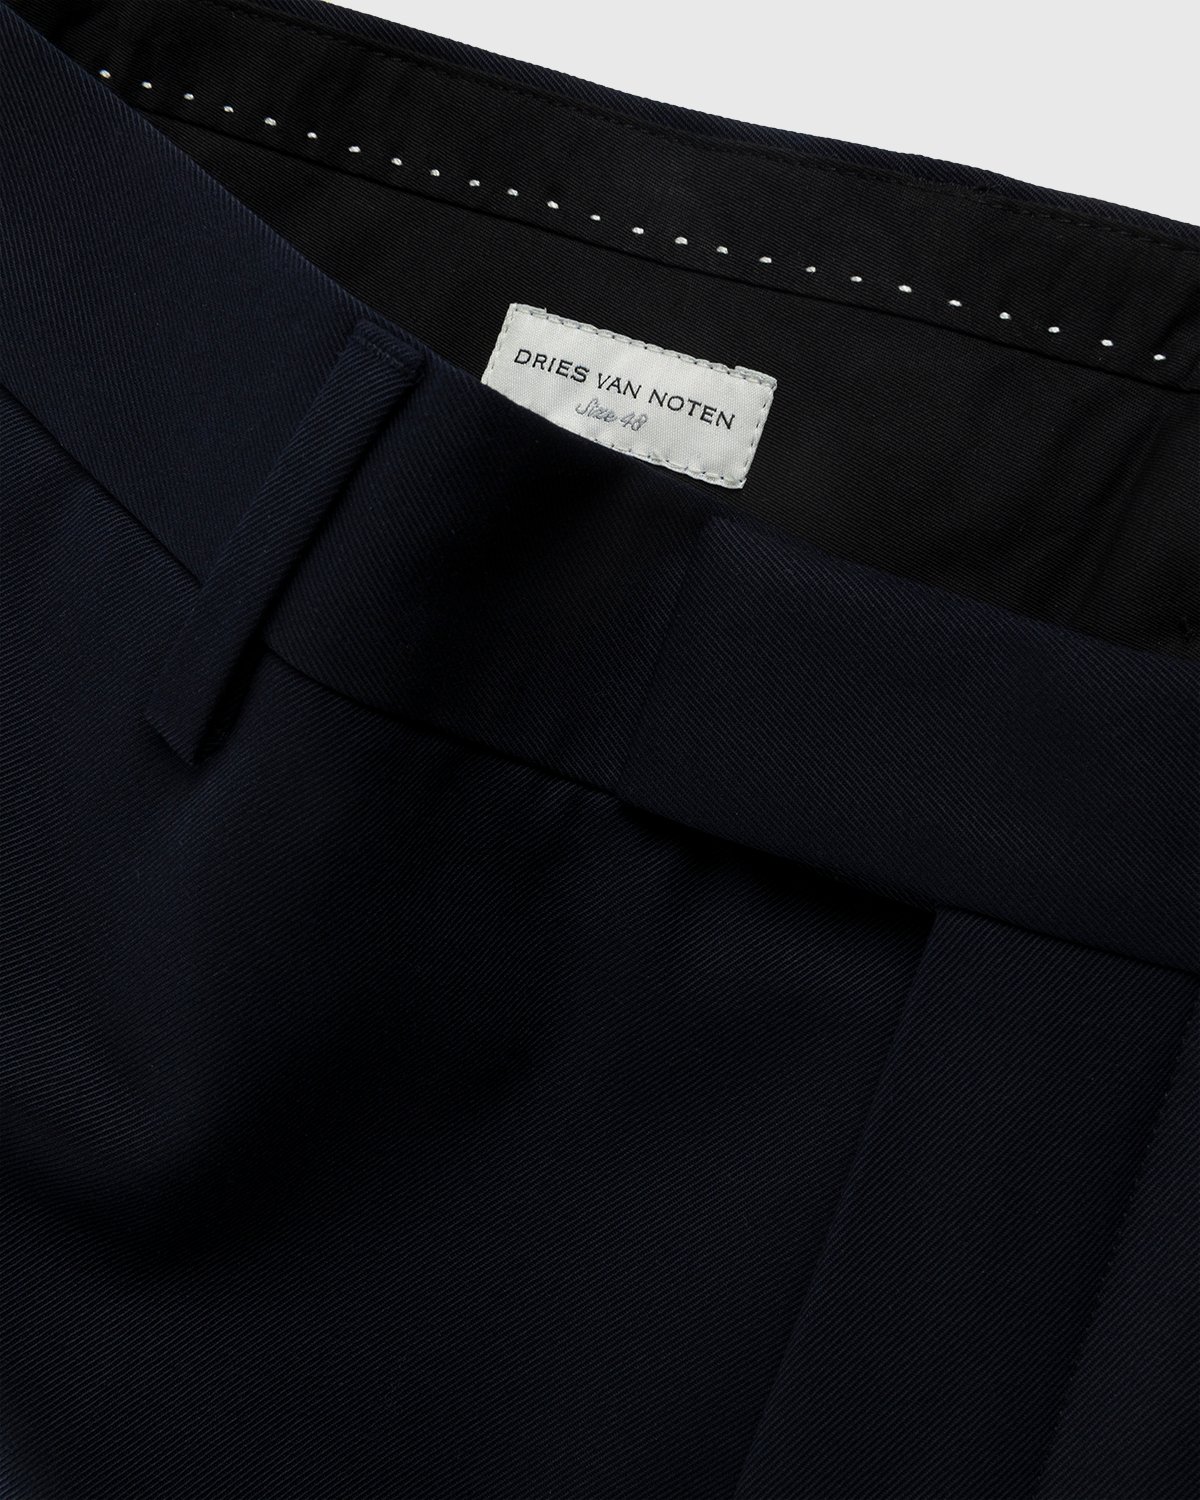 Dries van Noten - Prescott Double Layer Shorts Navy - Clothing - Blue - Image 6